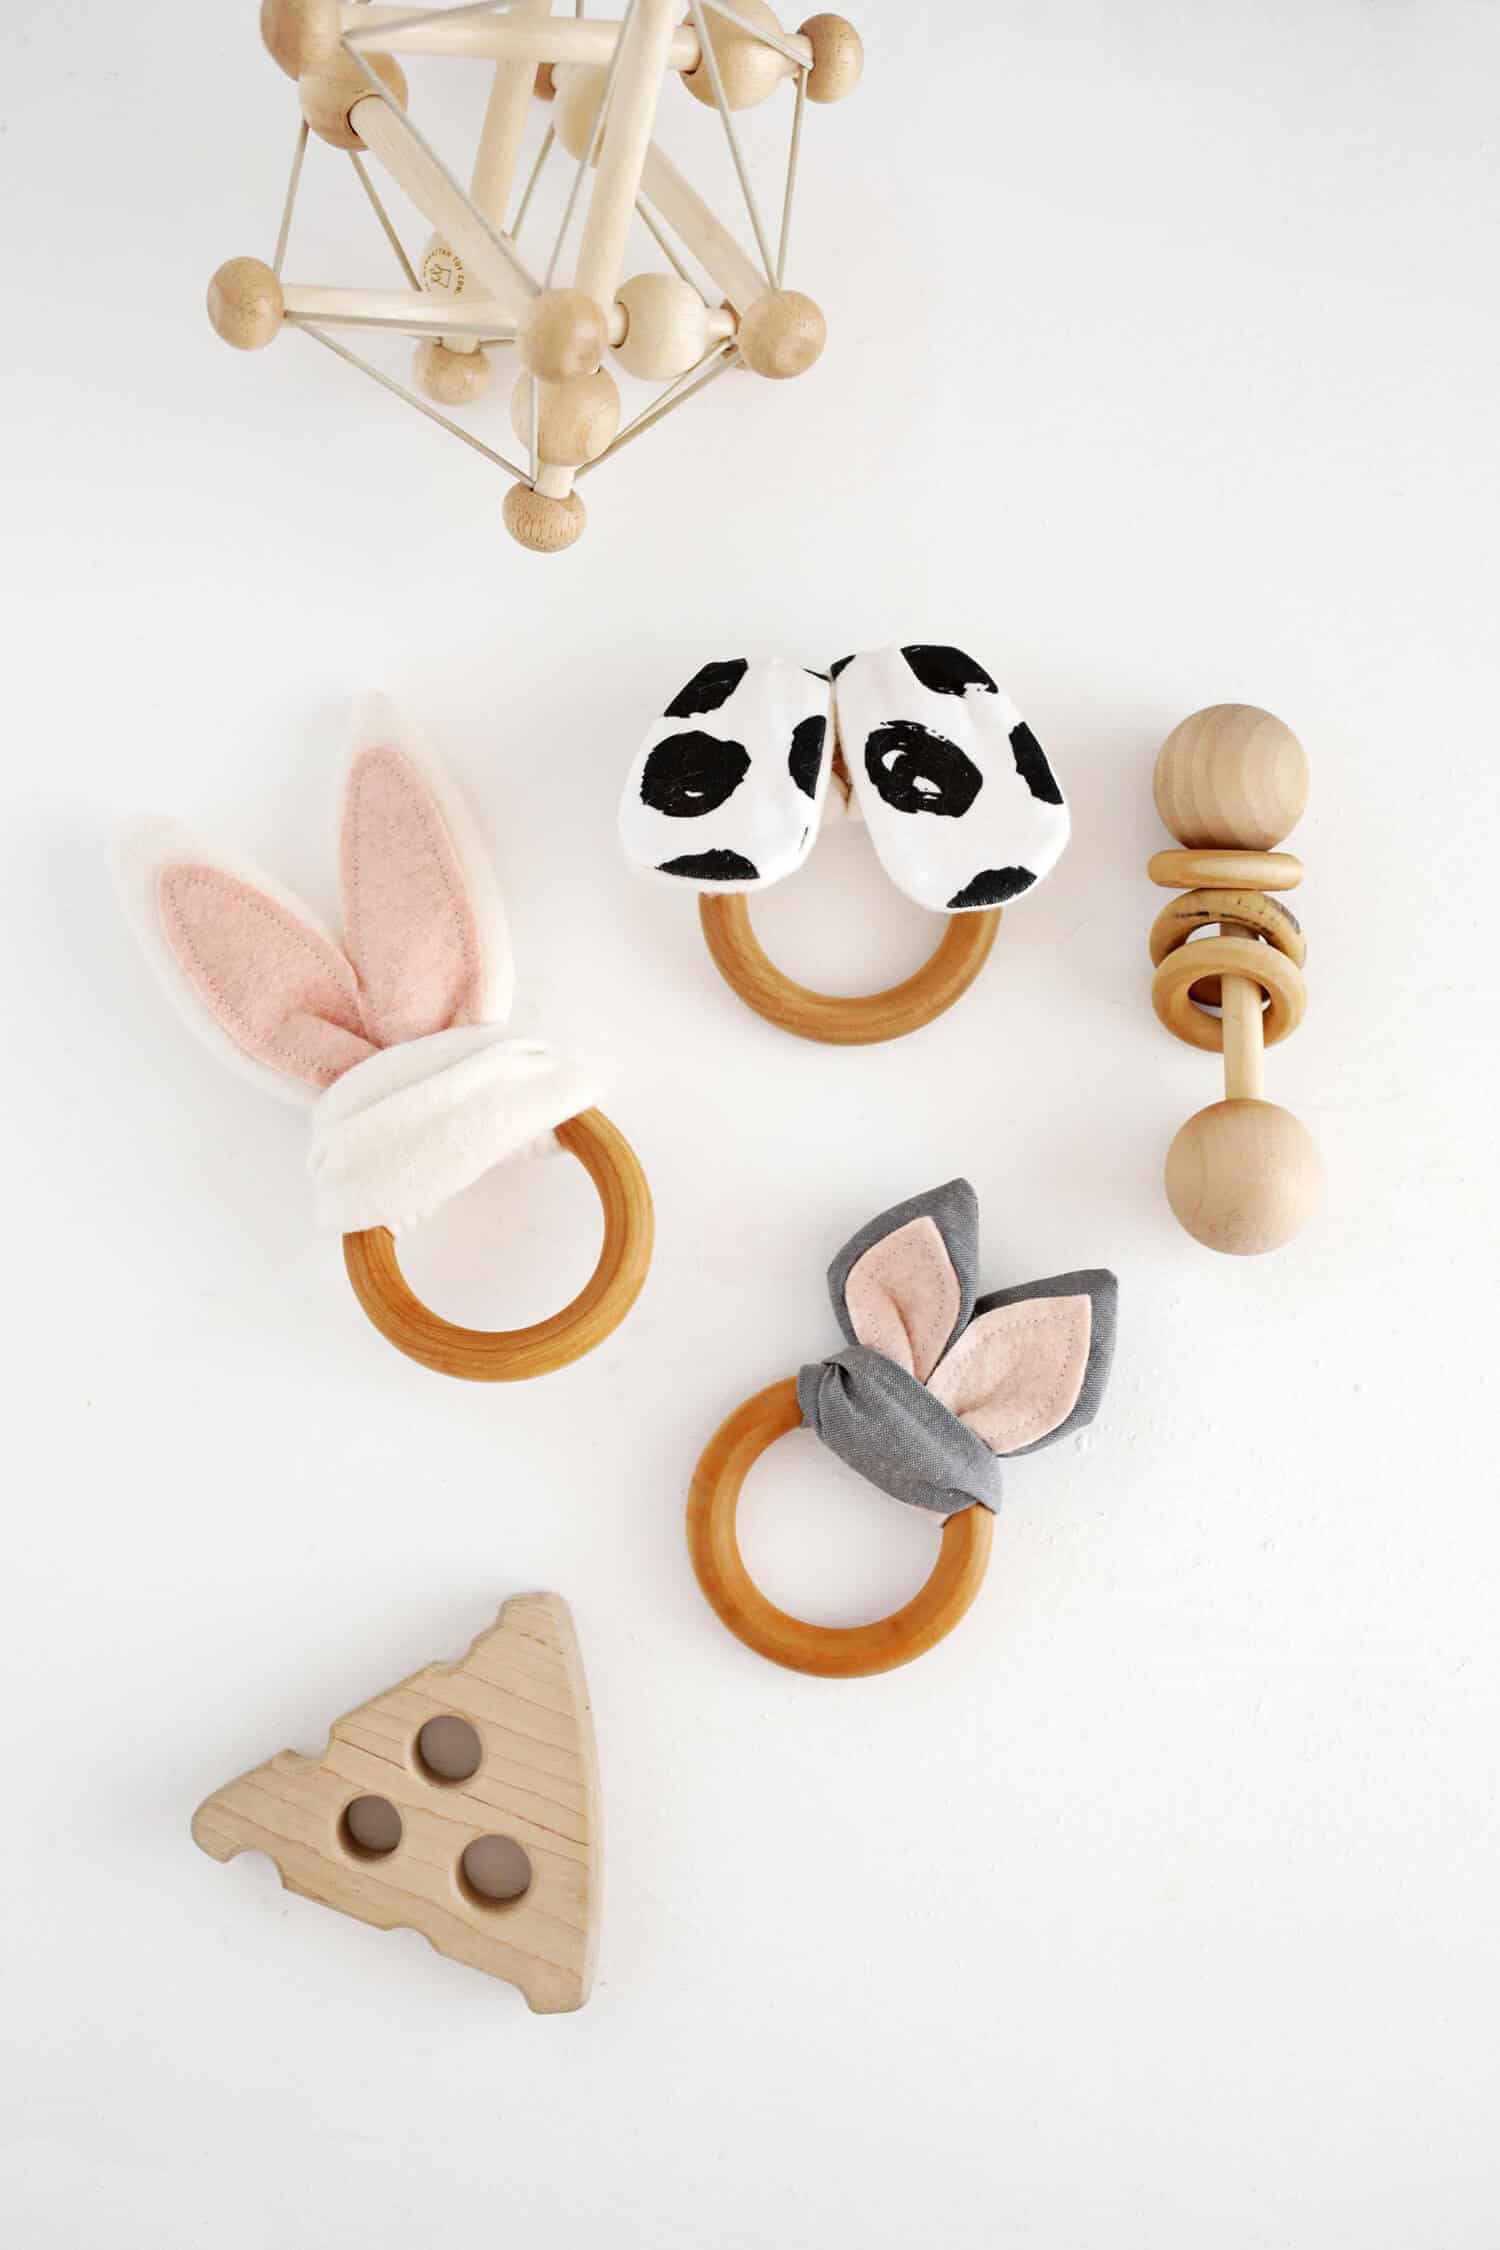 DIY wooden ring and animal ears teething toys (via abeautifulmess.com)